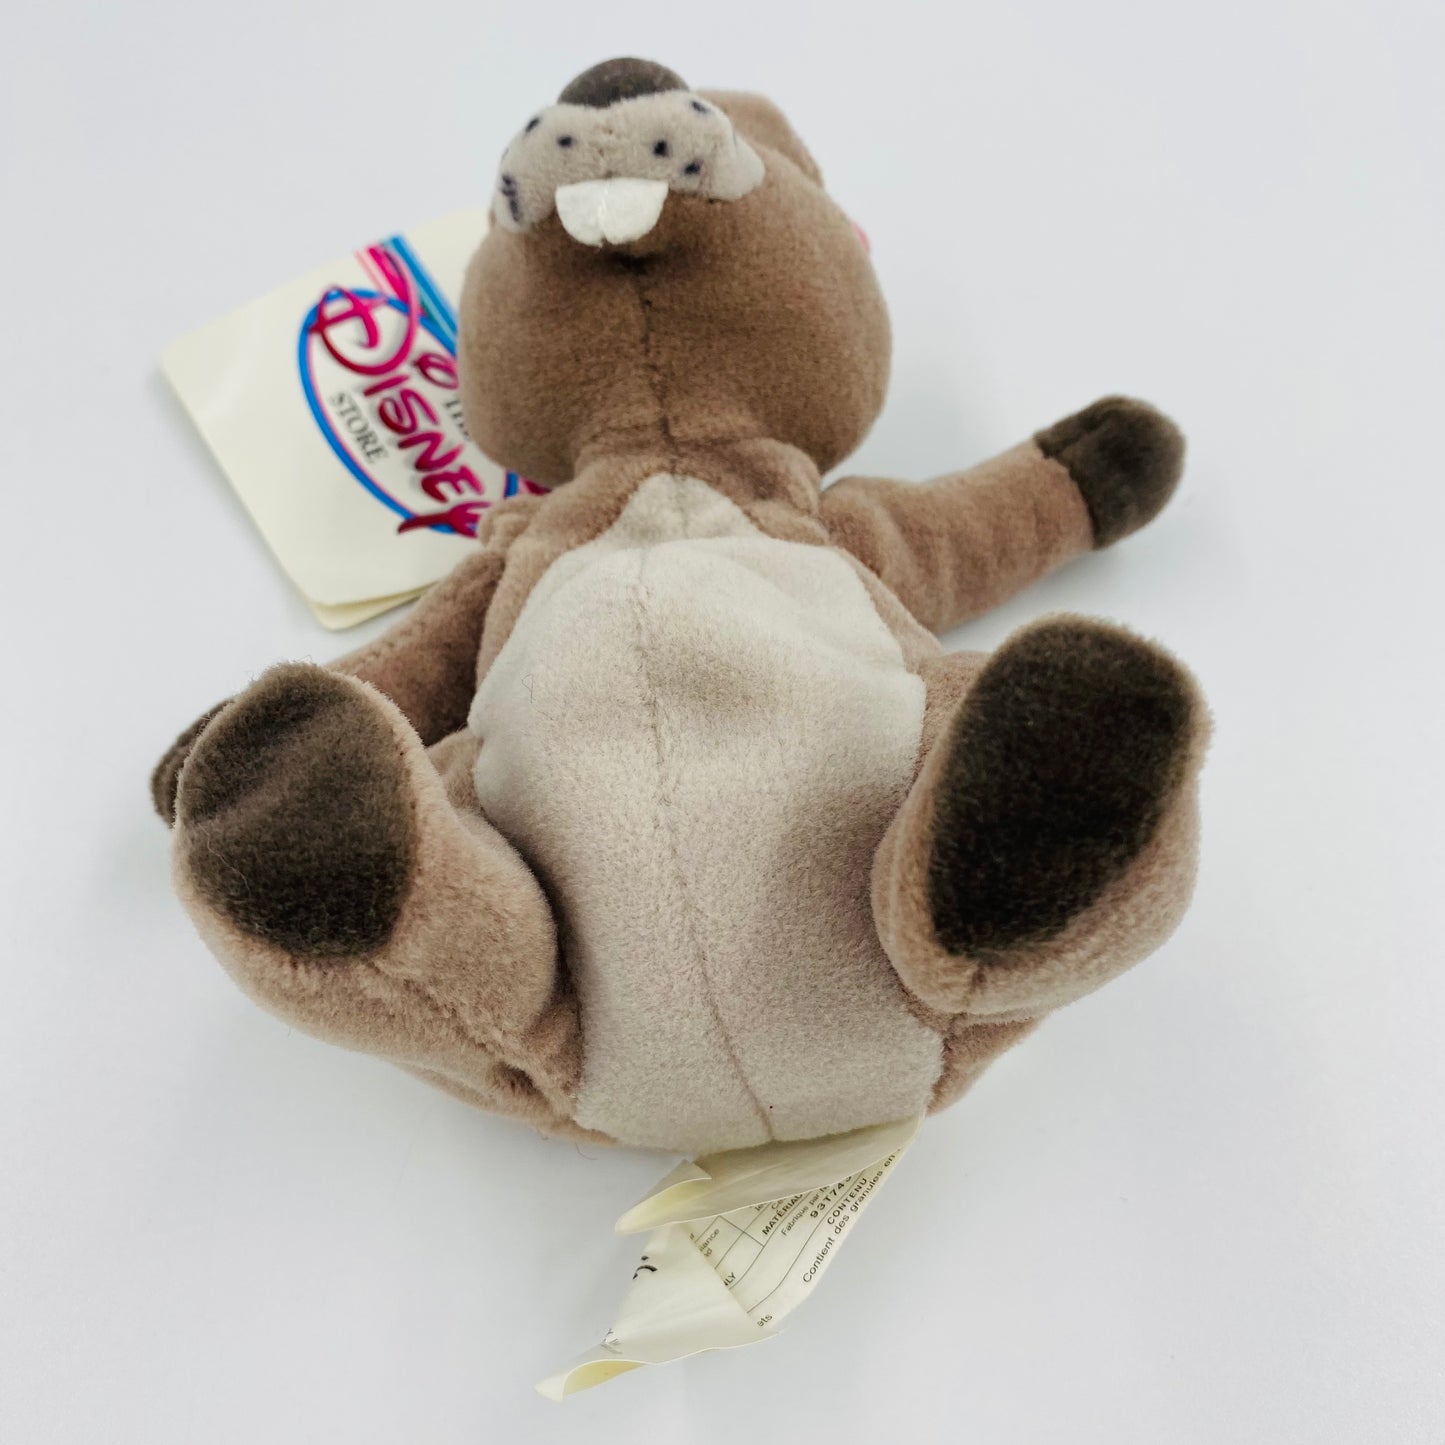 The Disney Store Winnie the Pooh Gopher mini bean bag plush